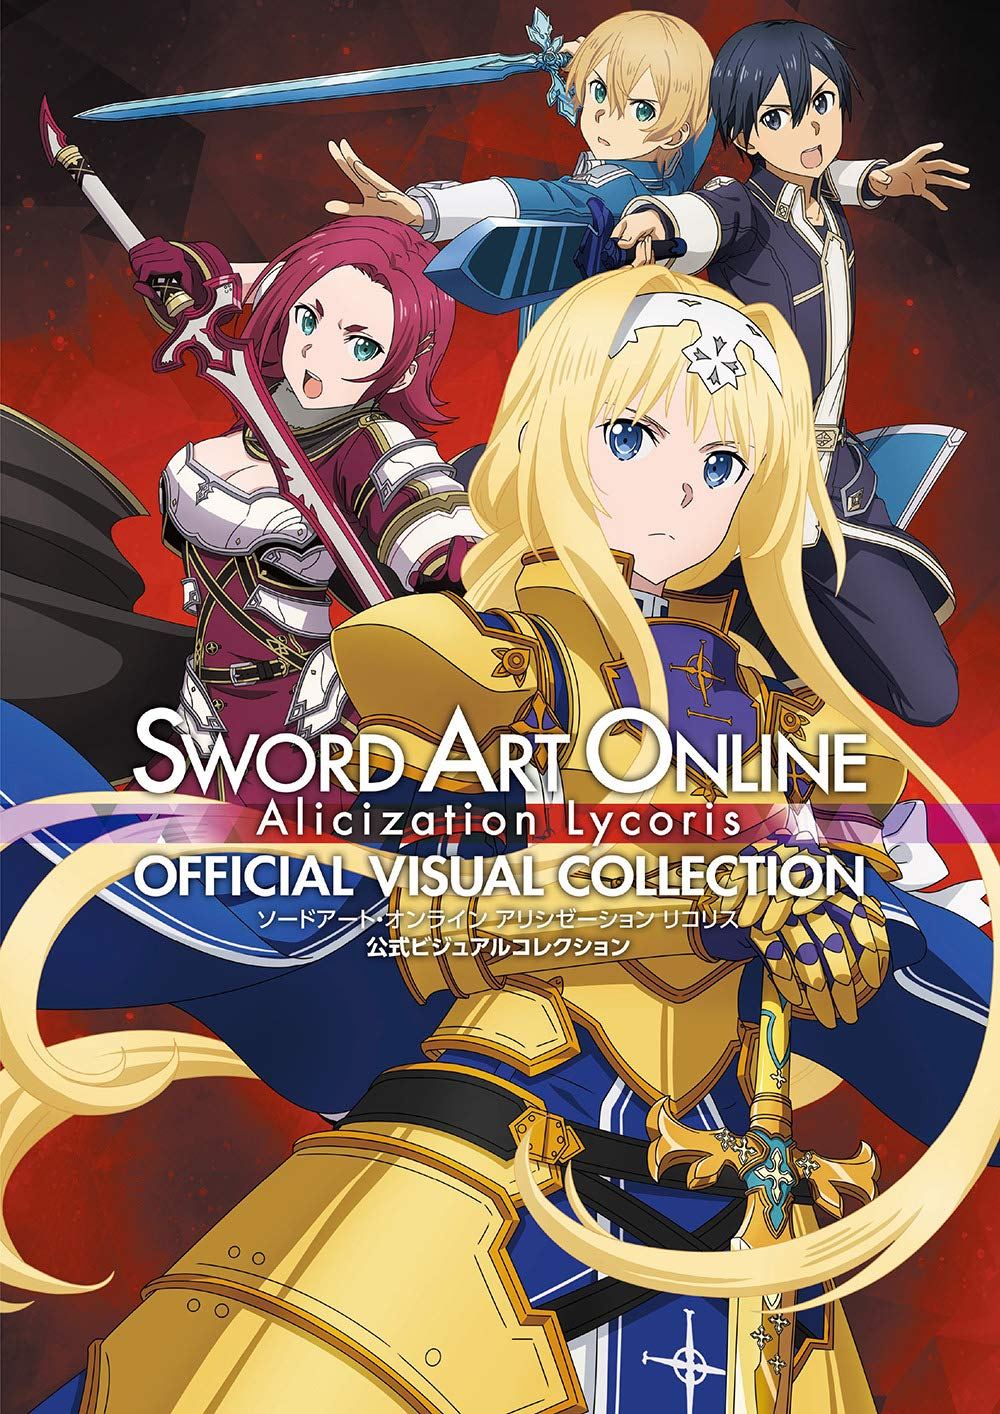 Sword Art Online: Alicization Lycoris Arrives This Week